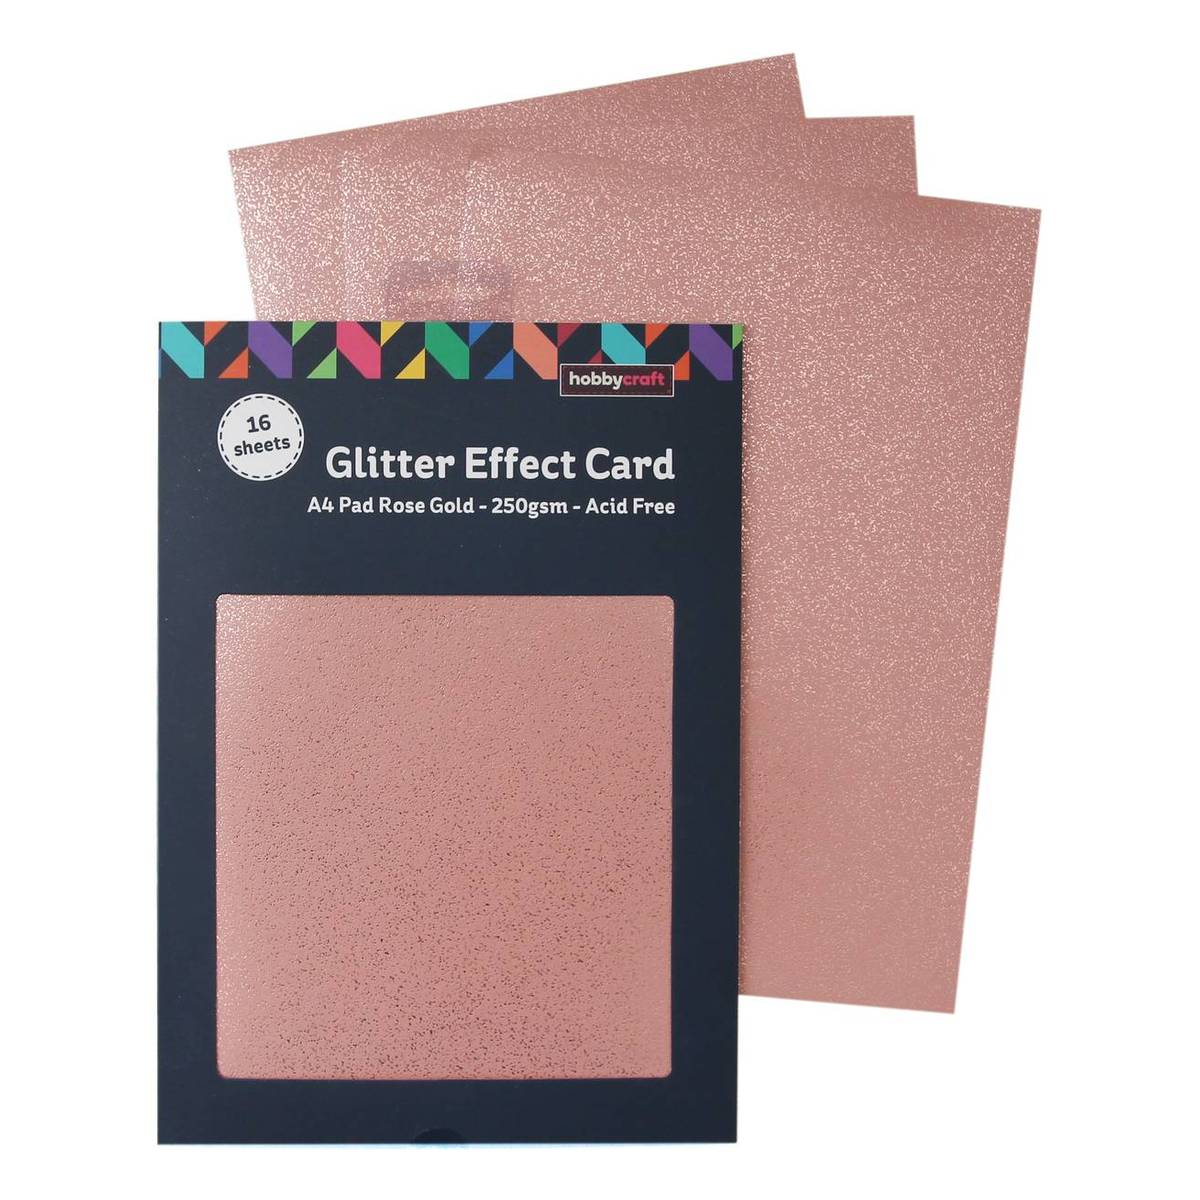 Glitter Cardstock Paper 100 Sheets,Glitter Card Stock Cardstock